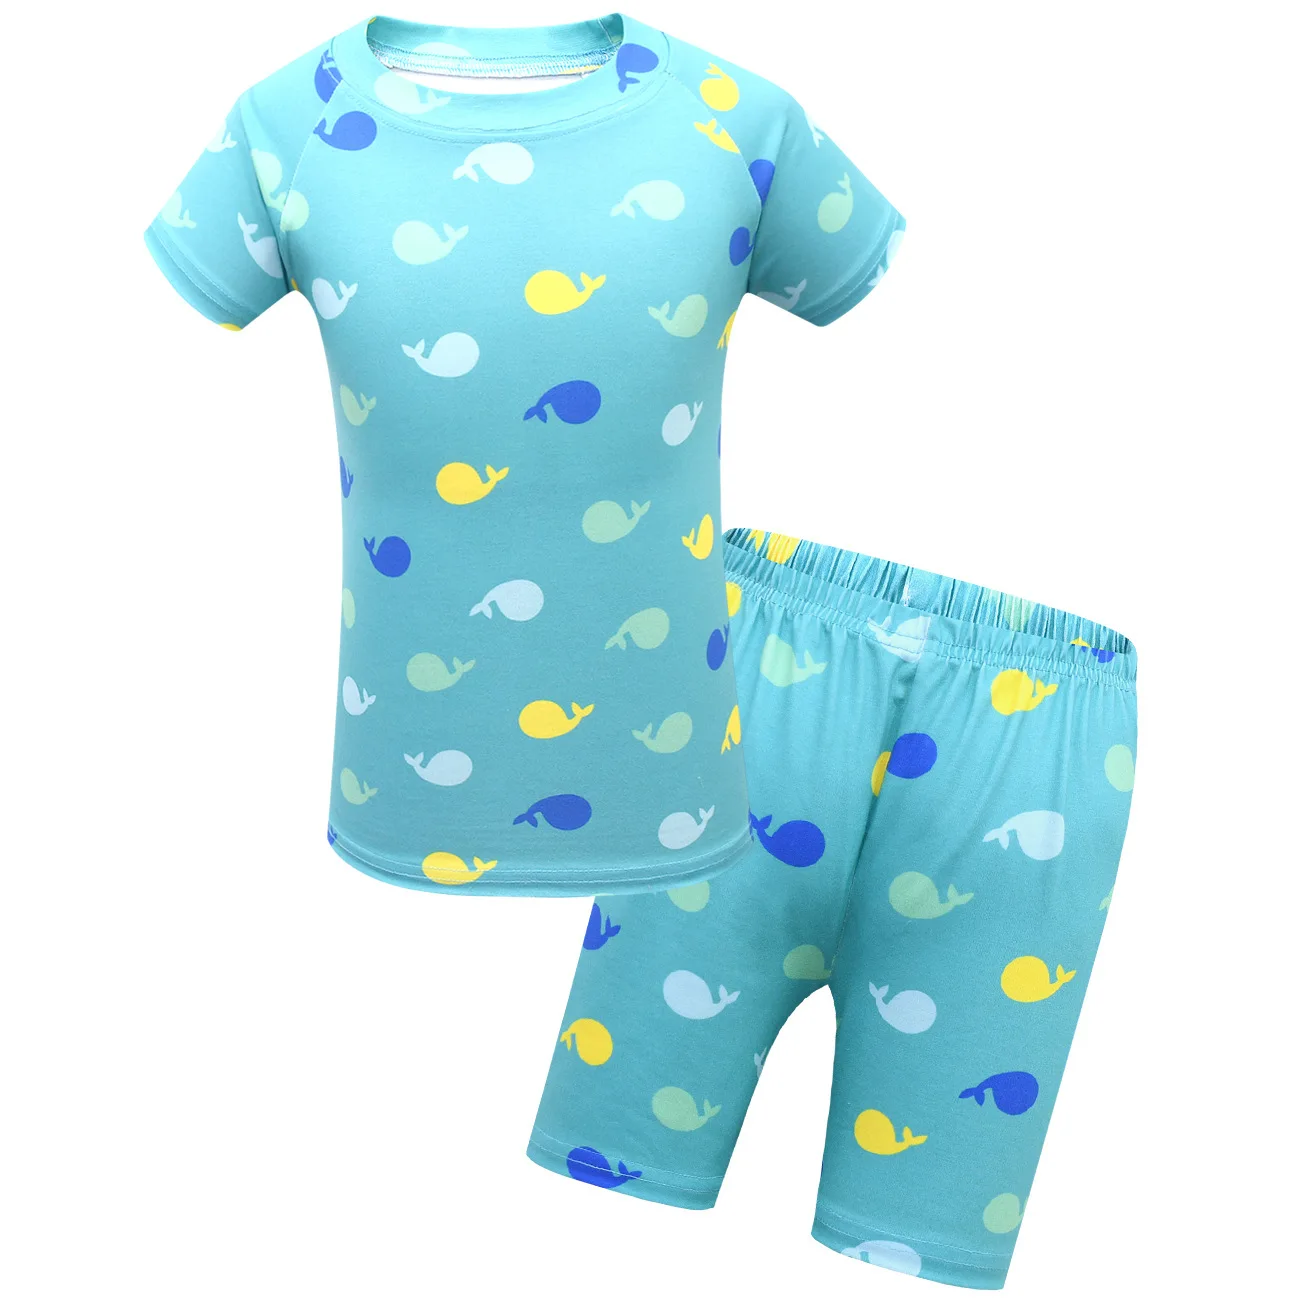 

CocoMelon Boy's Home Service Suit Underwear Cute Cartoon Clothes Christmas Pijamas Child Nightclothes Cotton Sleepwear